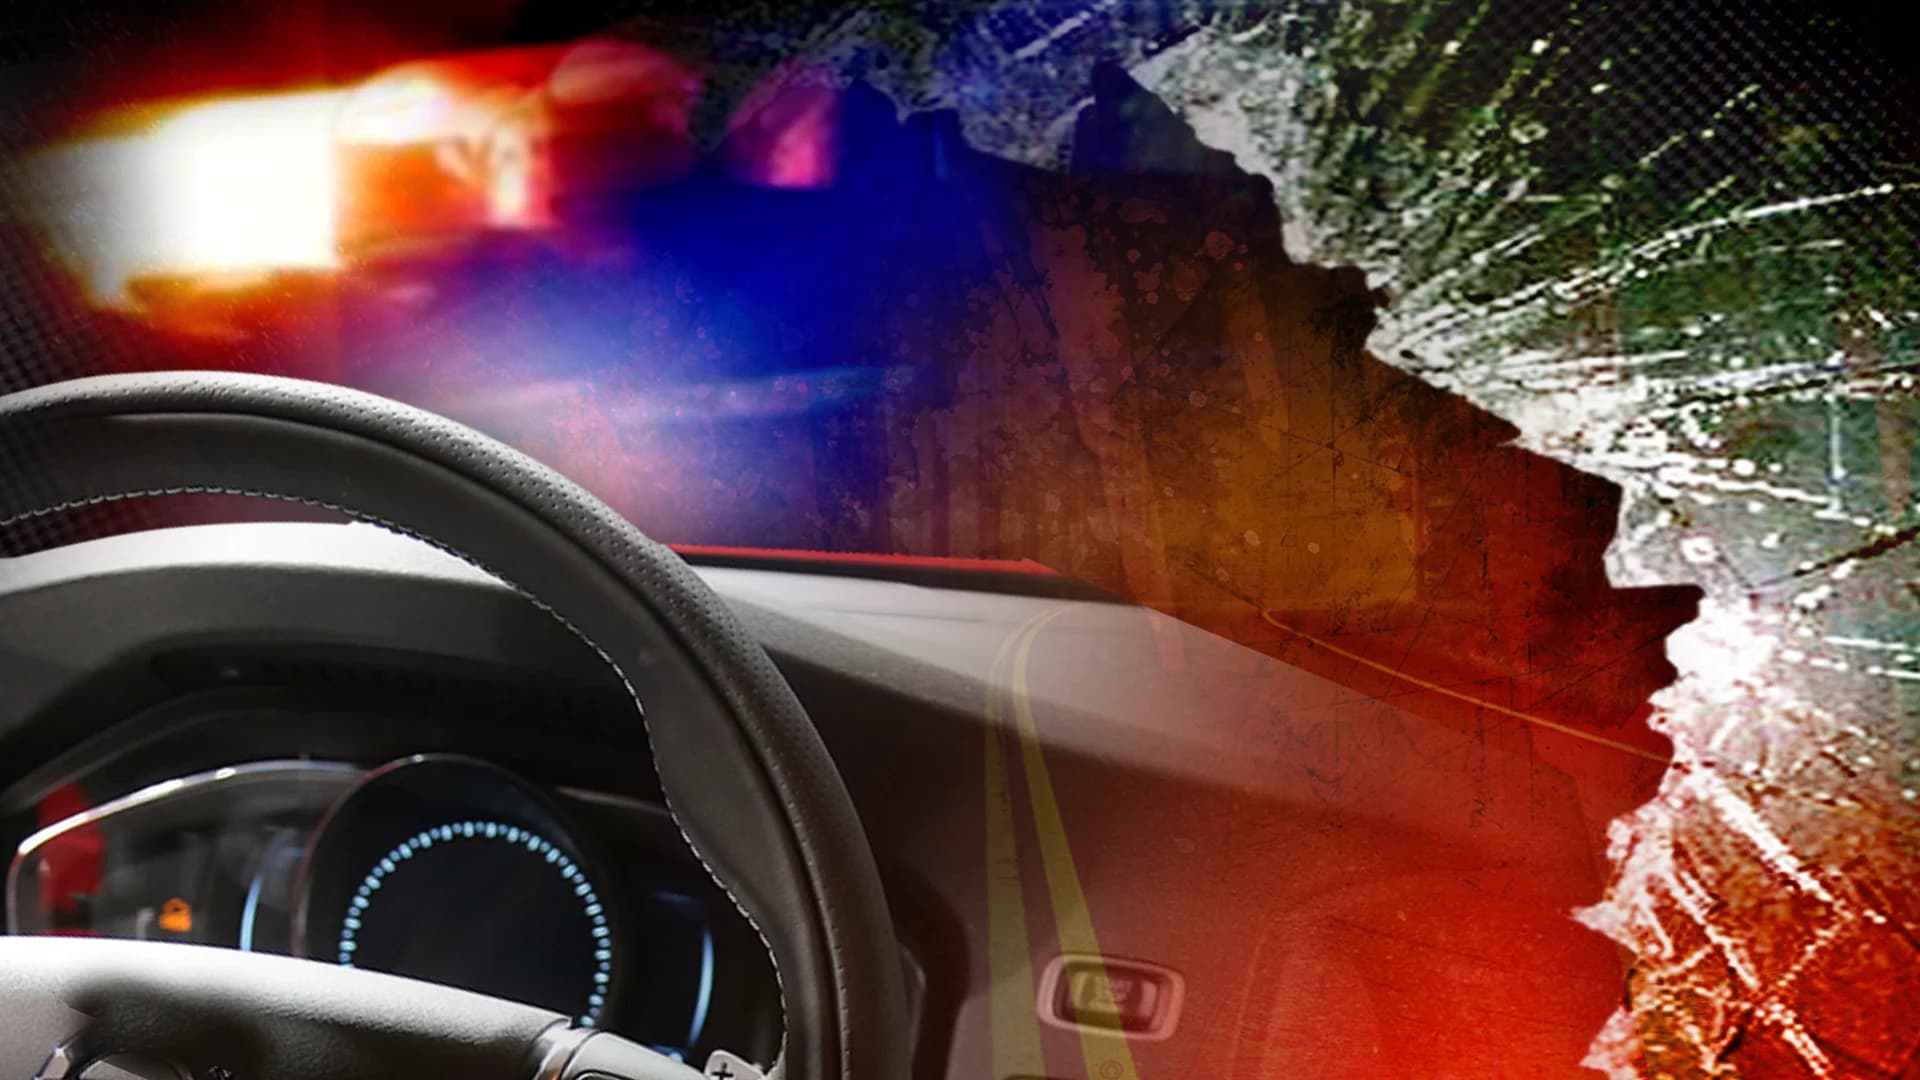 Authorities: Hit-and-run driver fabricated carjacking report